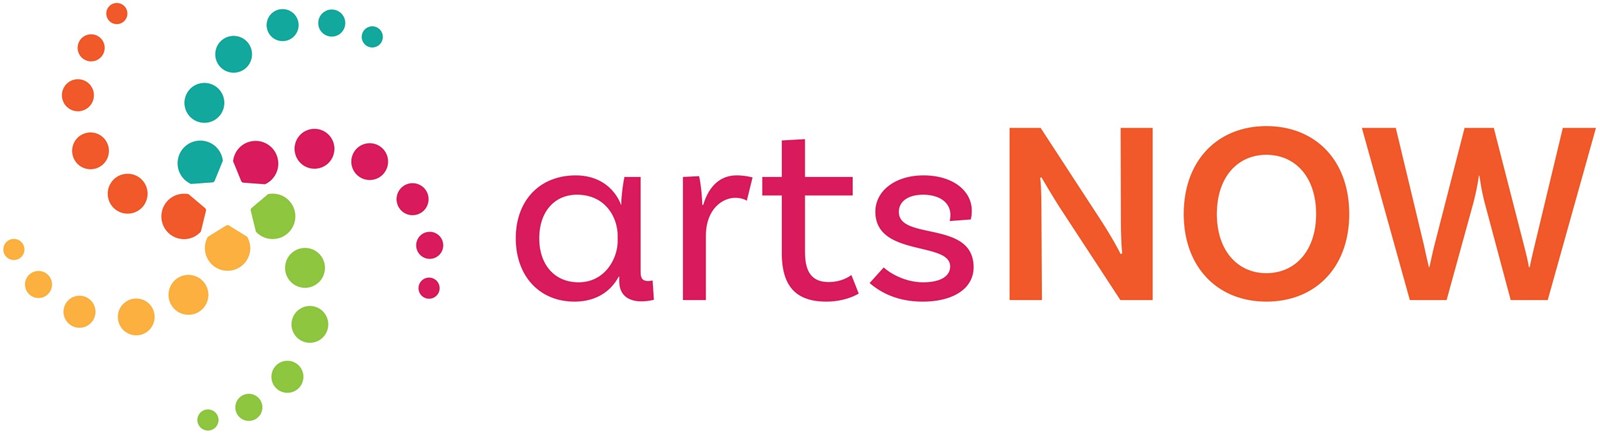 Arts Now Logo.jpg